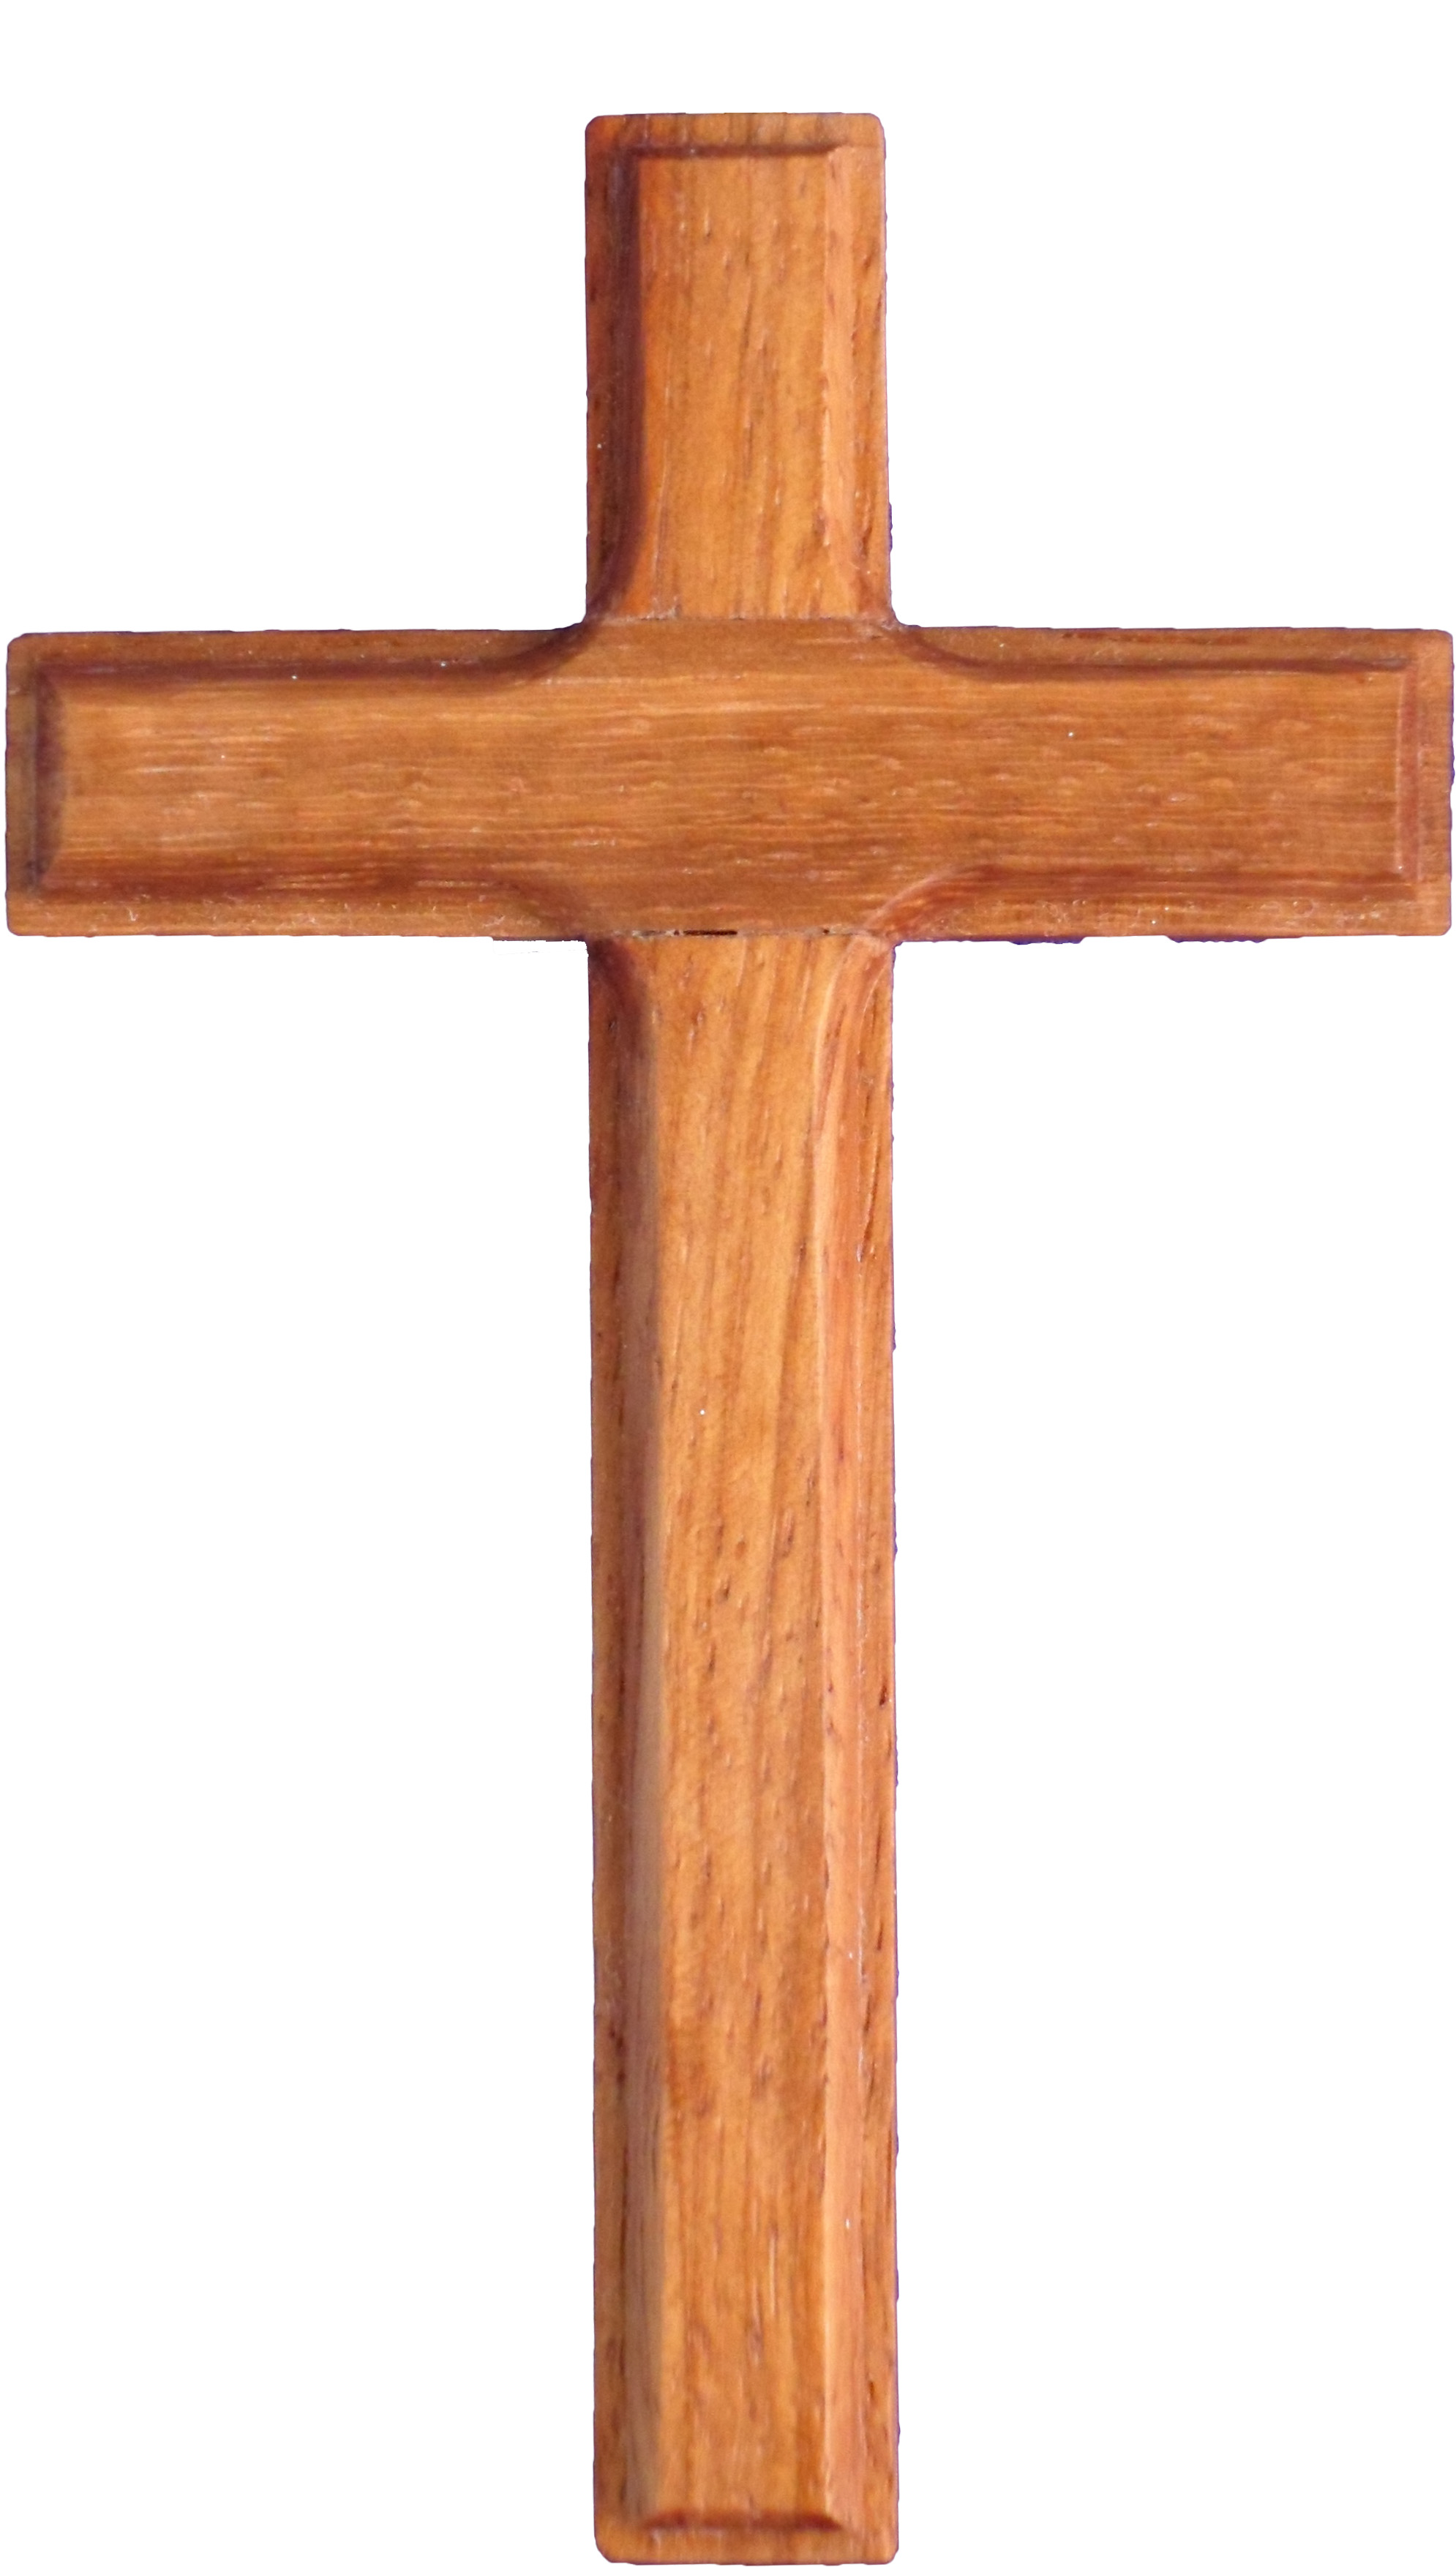 crucifix clipart plain